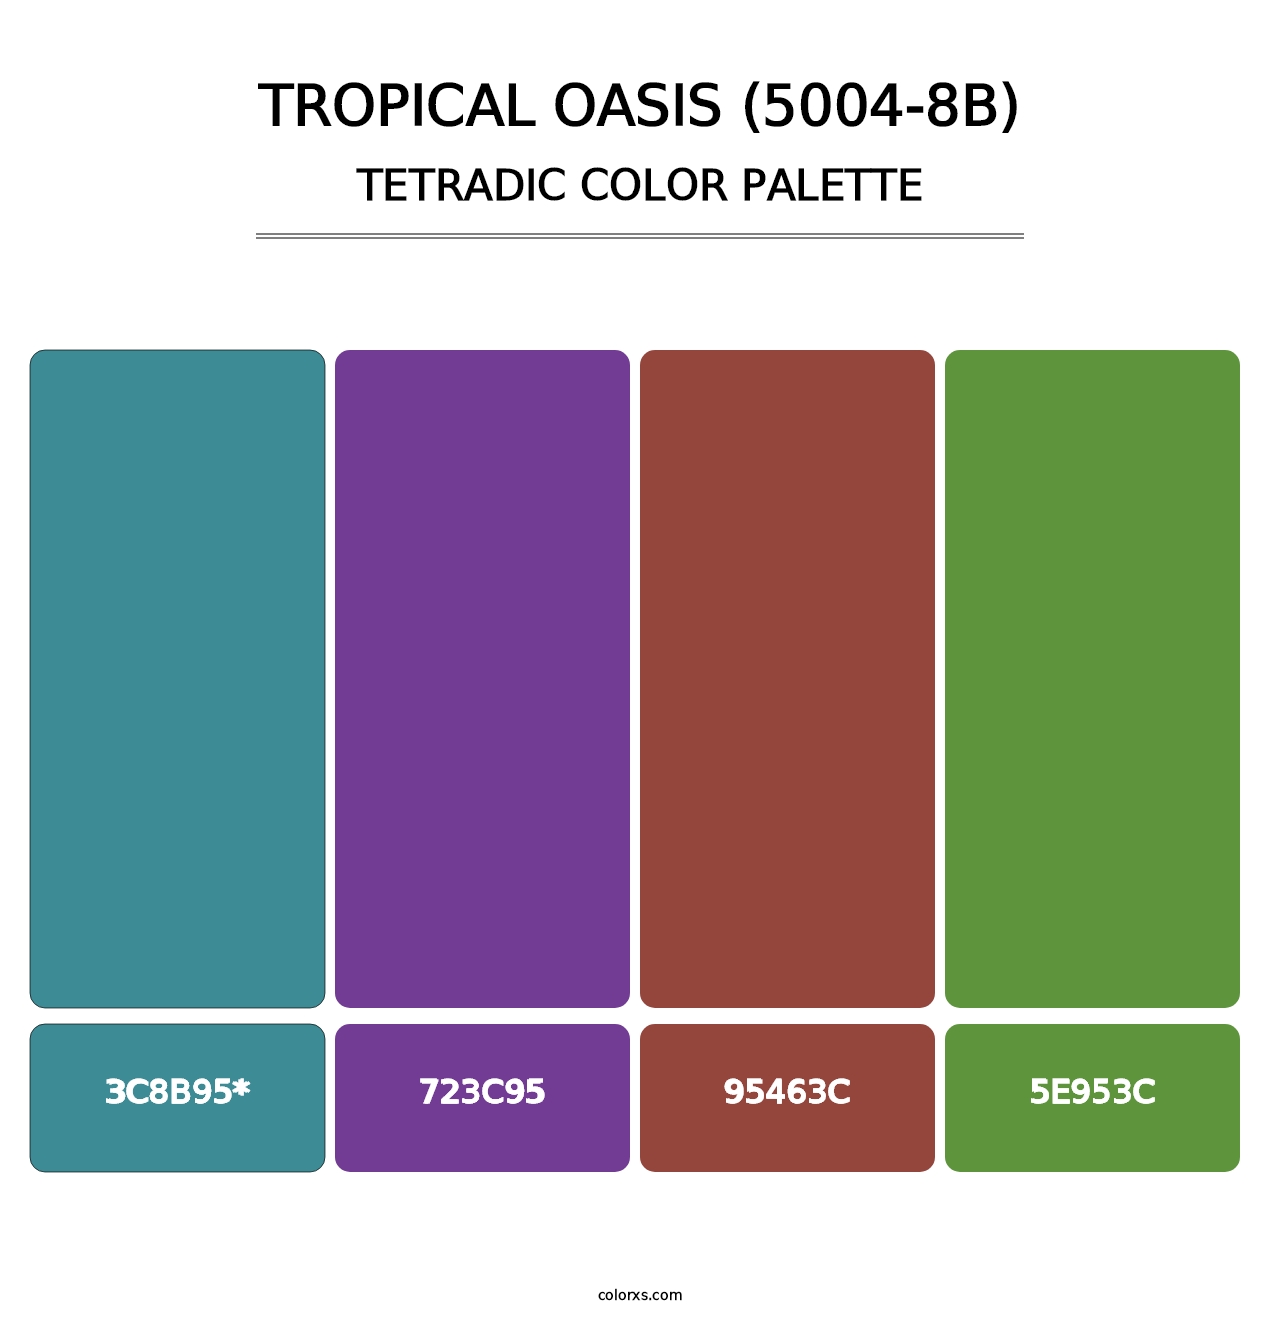 Tropical Oasis (5004-8B) - Tetradic Color Palette